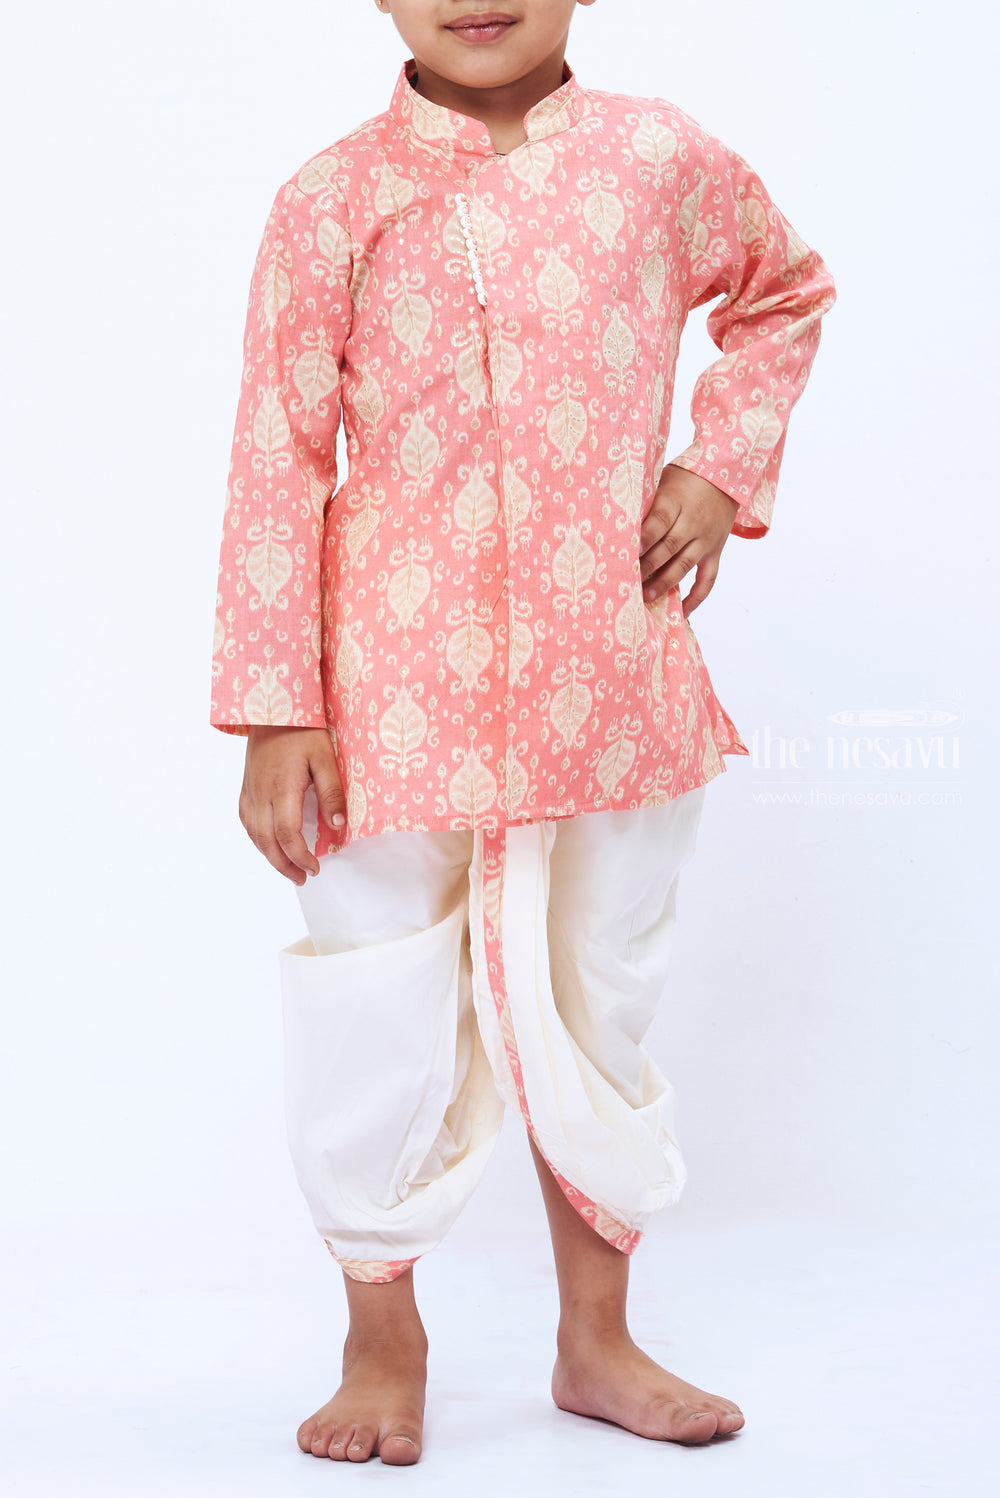 The Nesavu Boys Dothi Set Boys Charming Pink Paisley Print Kurta with White Dhoti Set Nesavu Boys Pink Paisley Kurta White Dhoti Set | Festive and Fun Ethnic Wear | The Nesavu